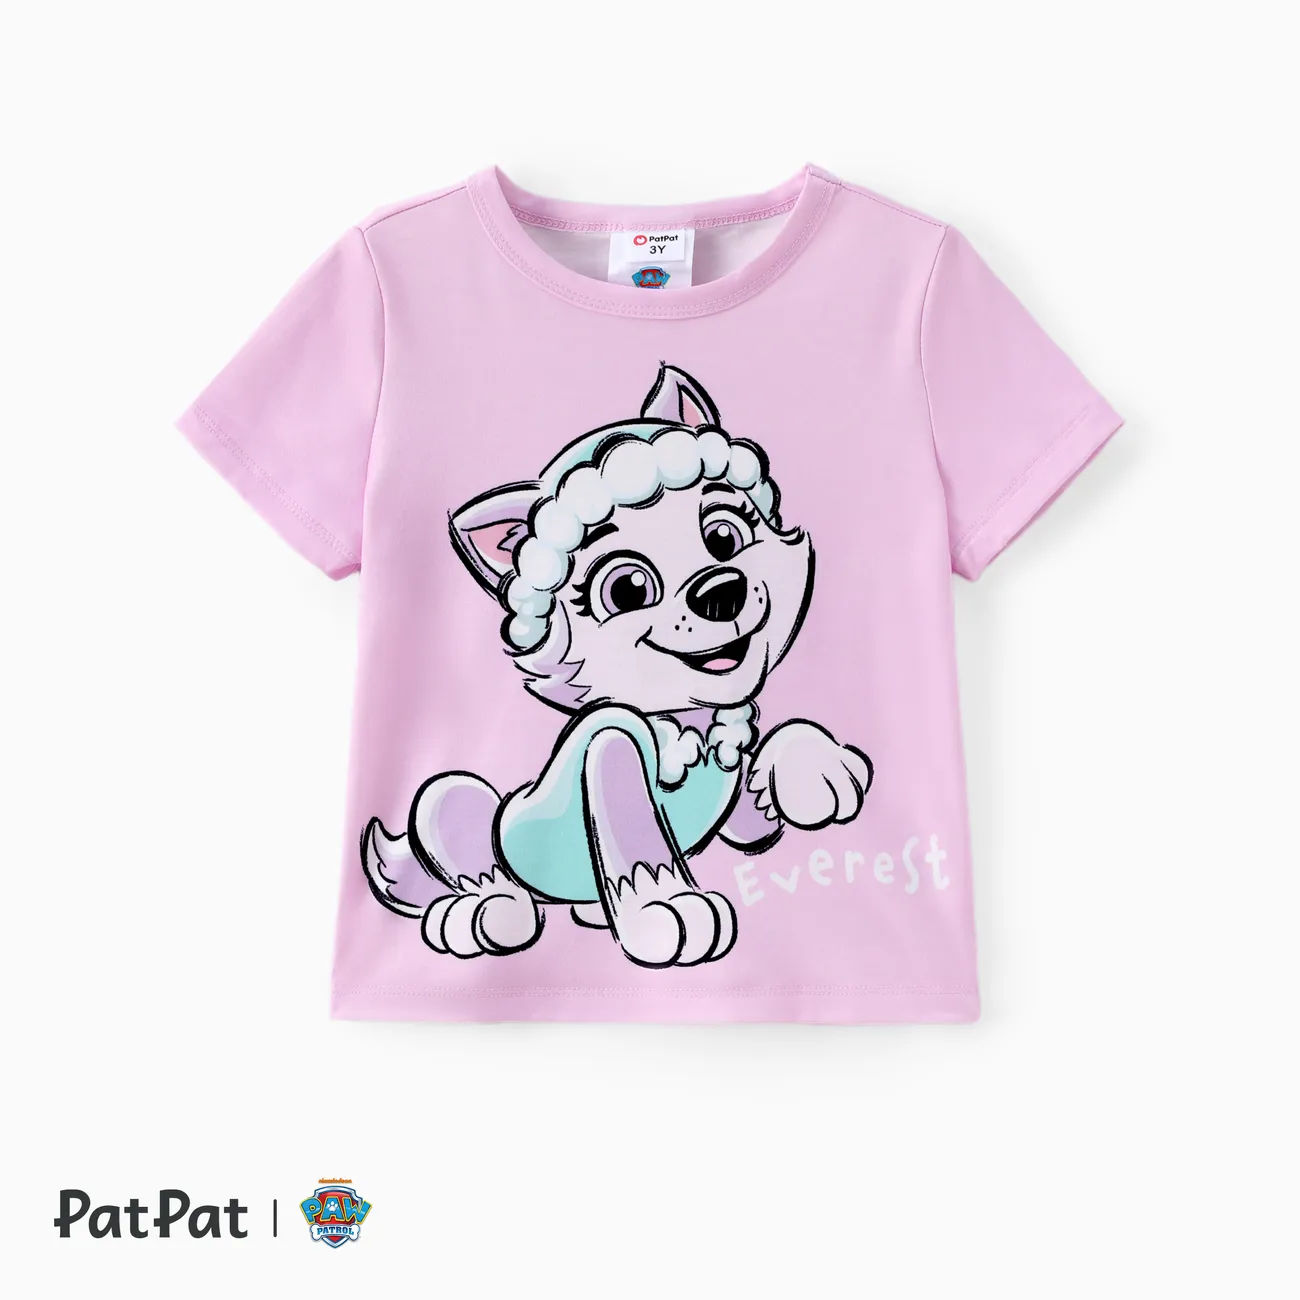 PAW Patrol Toddler Boy/Toddler Girl Positioned printed graphic T-shirt
 Light Purple big image 1